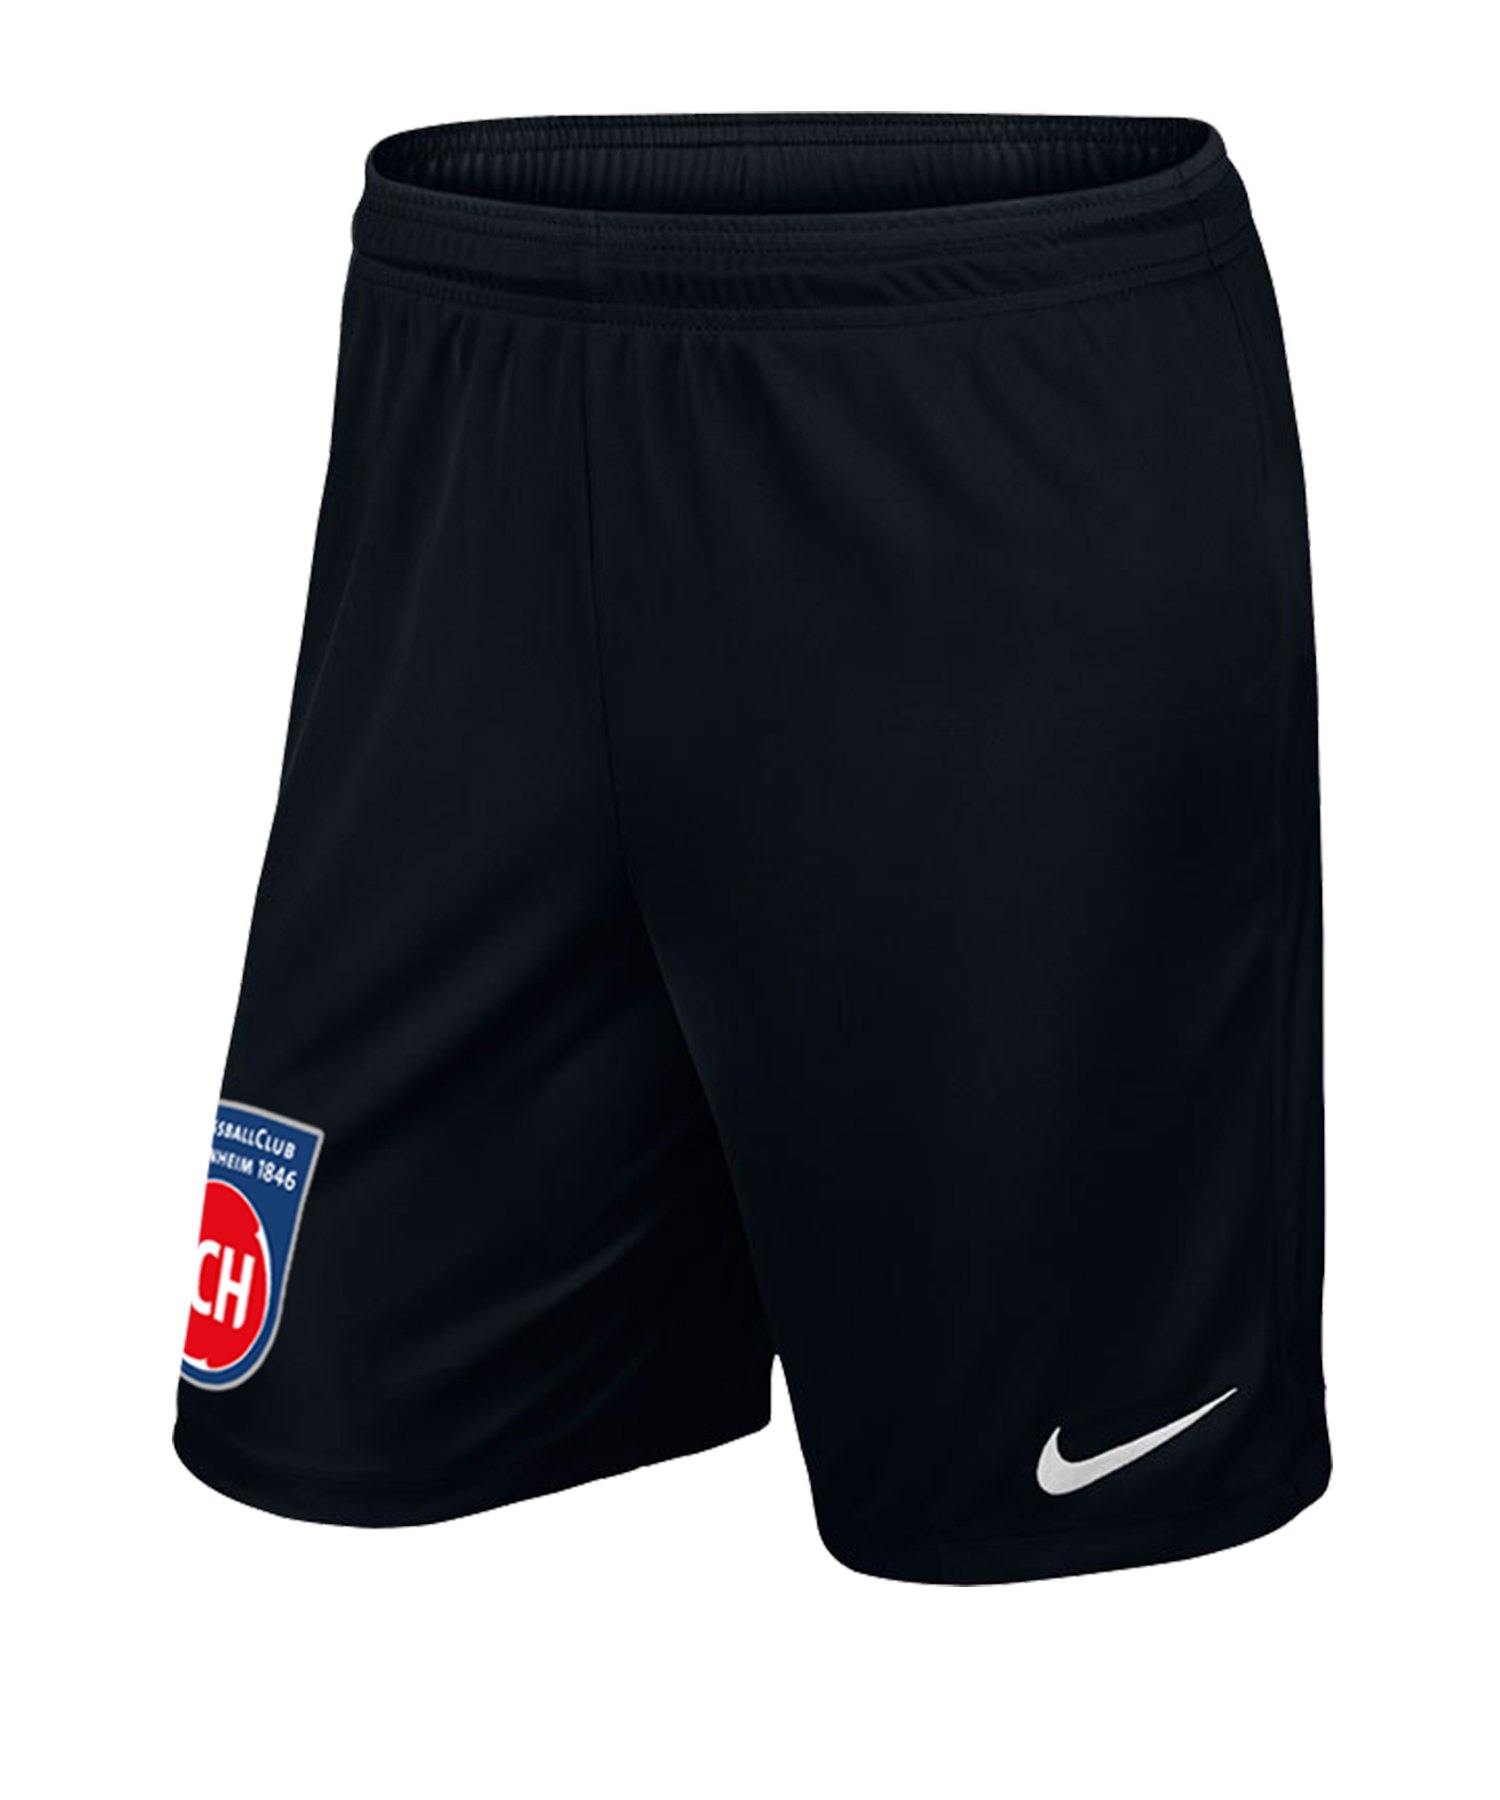 Nike 1. FC Heidenheim TW-Short Kids 2019/2020 F010 - schwarz